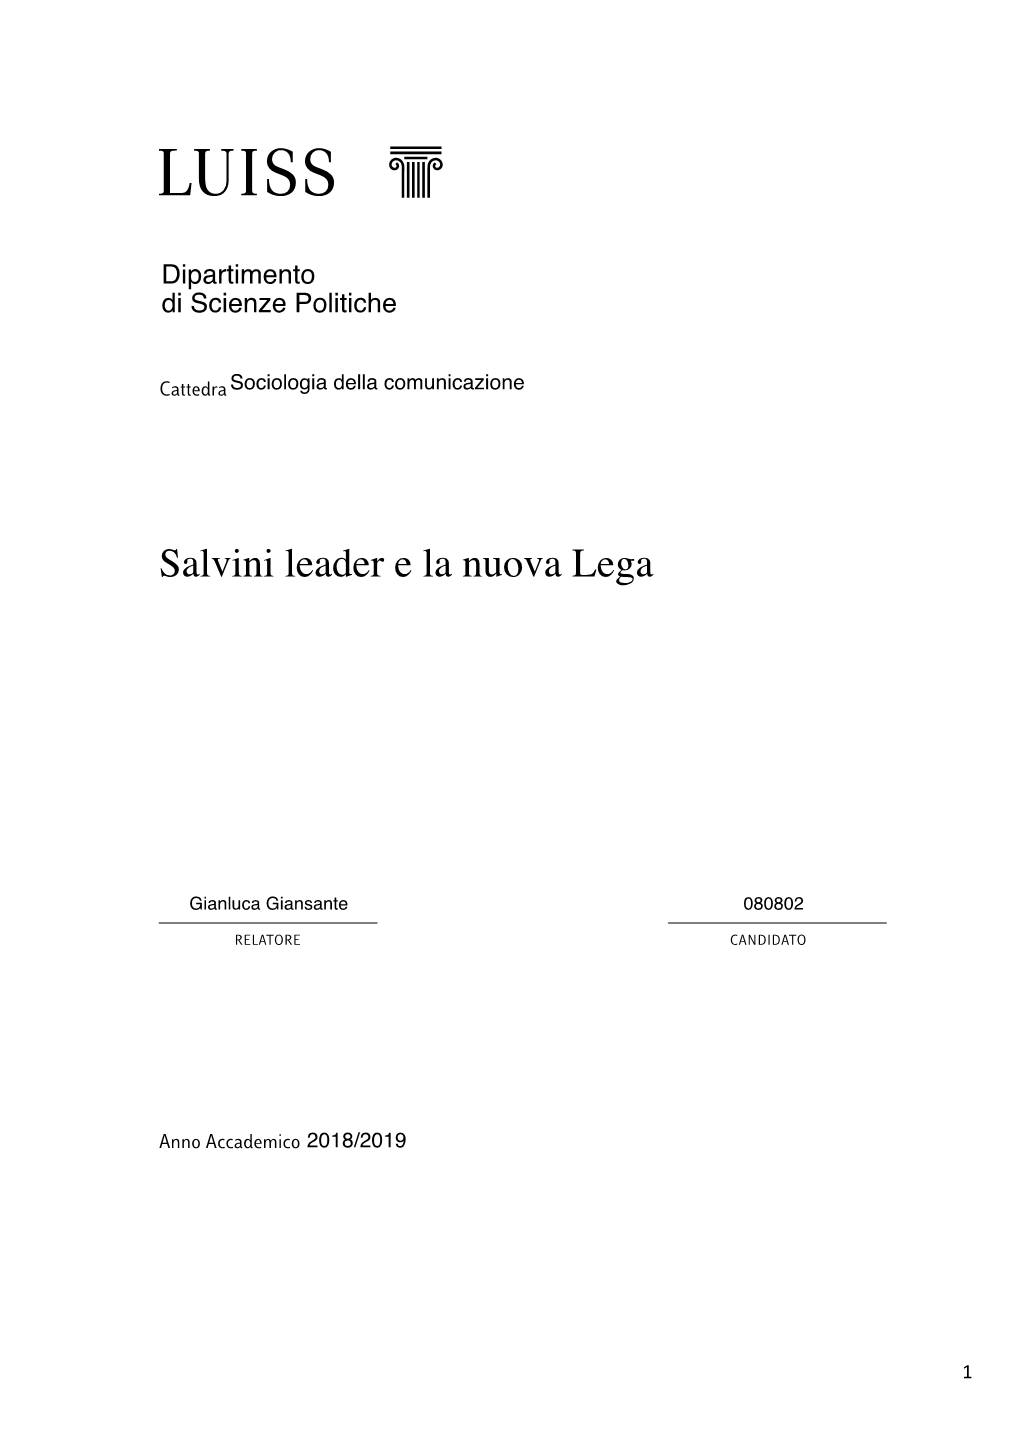 Salvini Leader E La Nuova Lega”